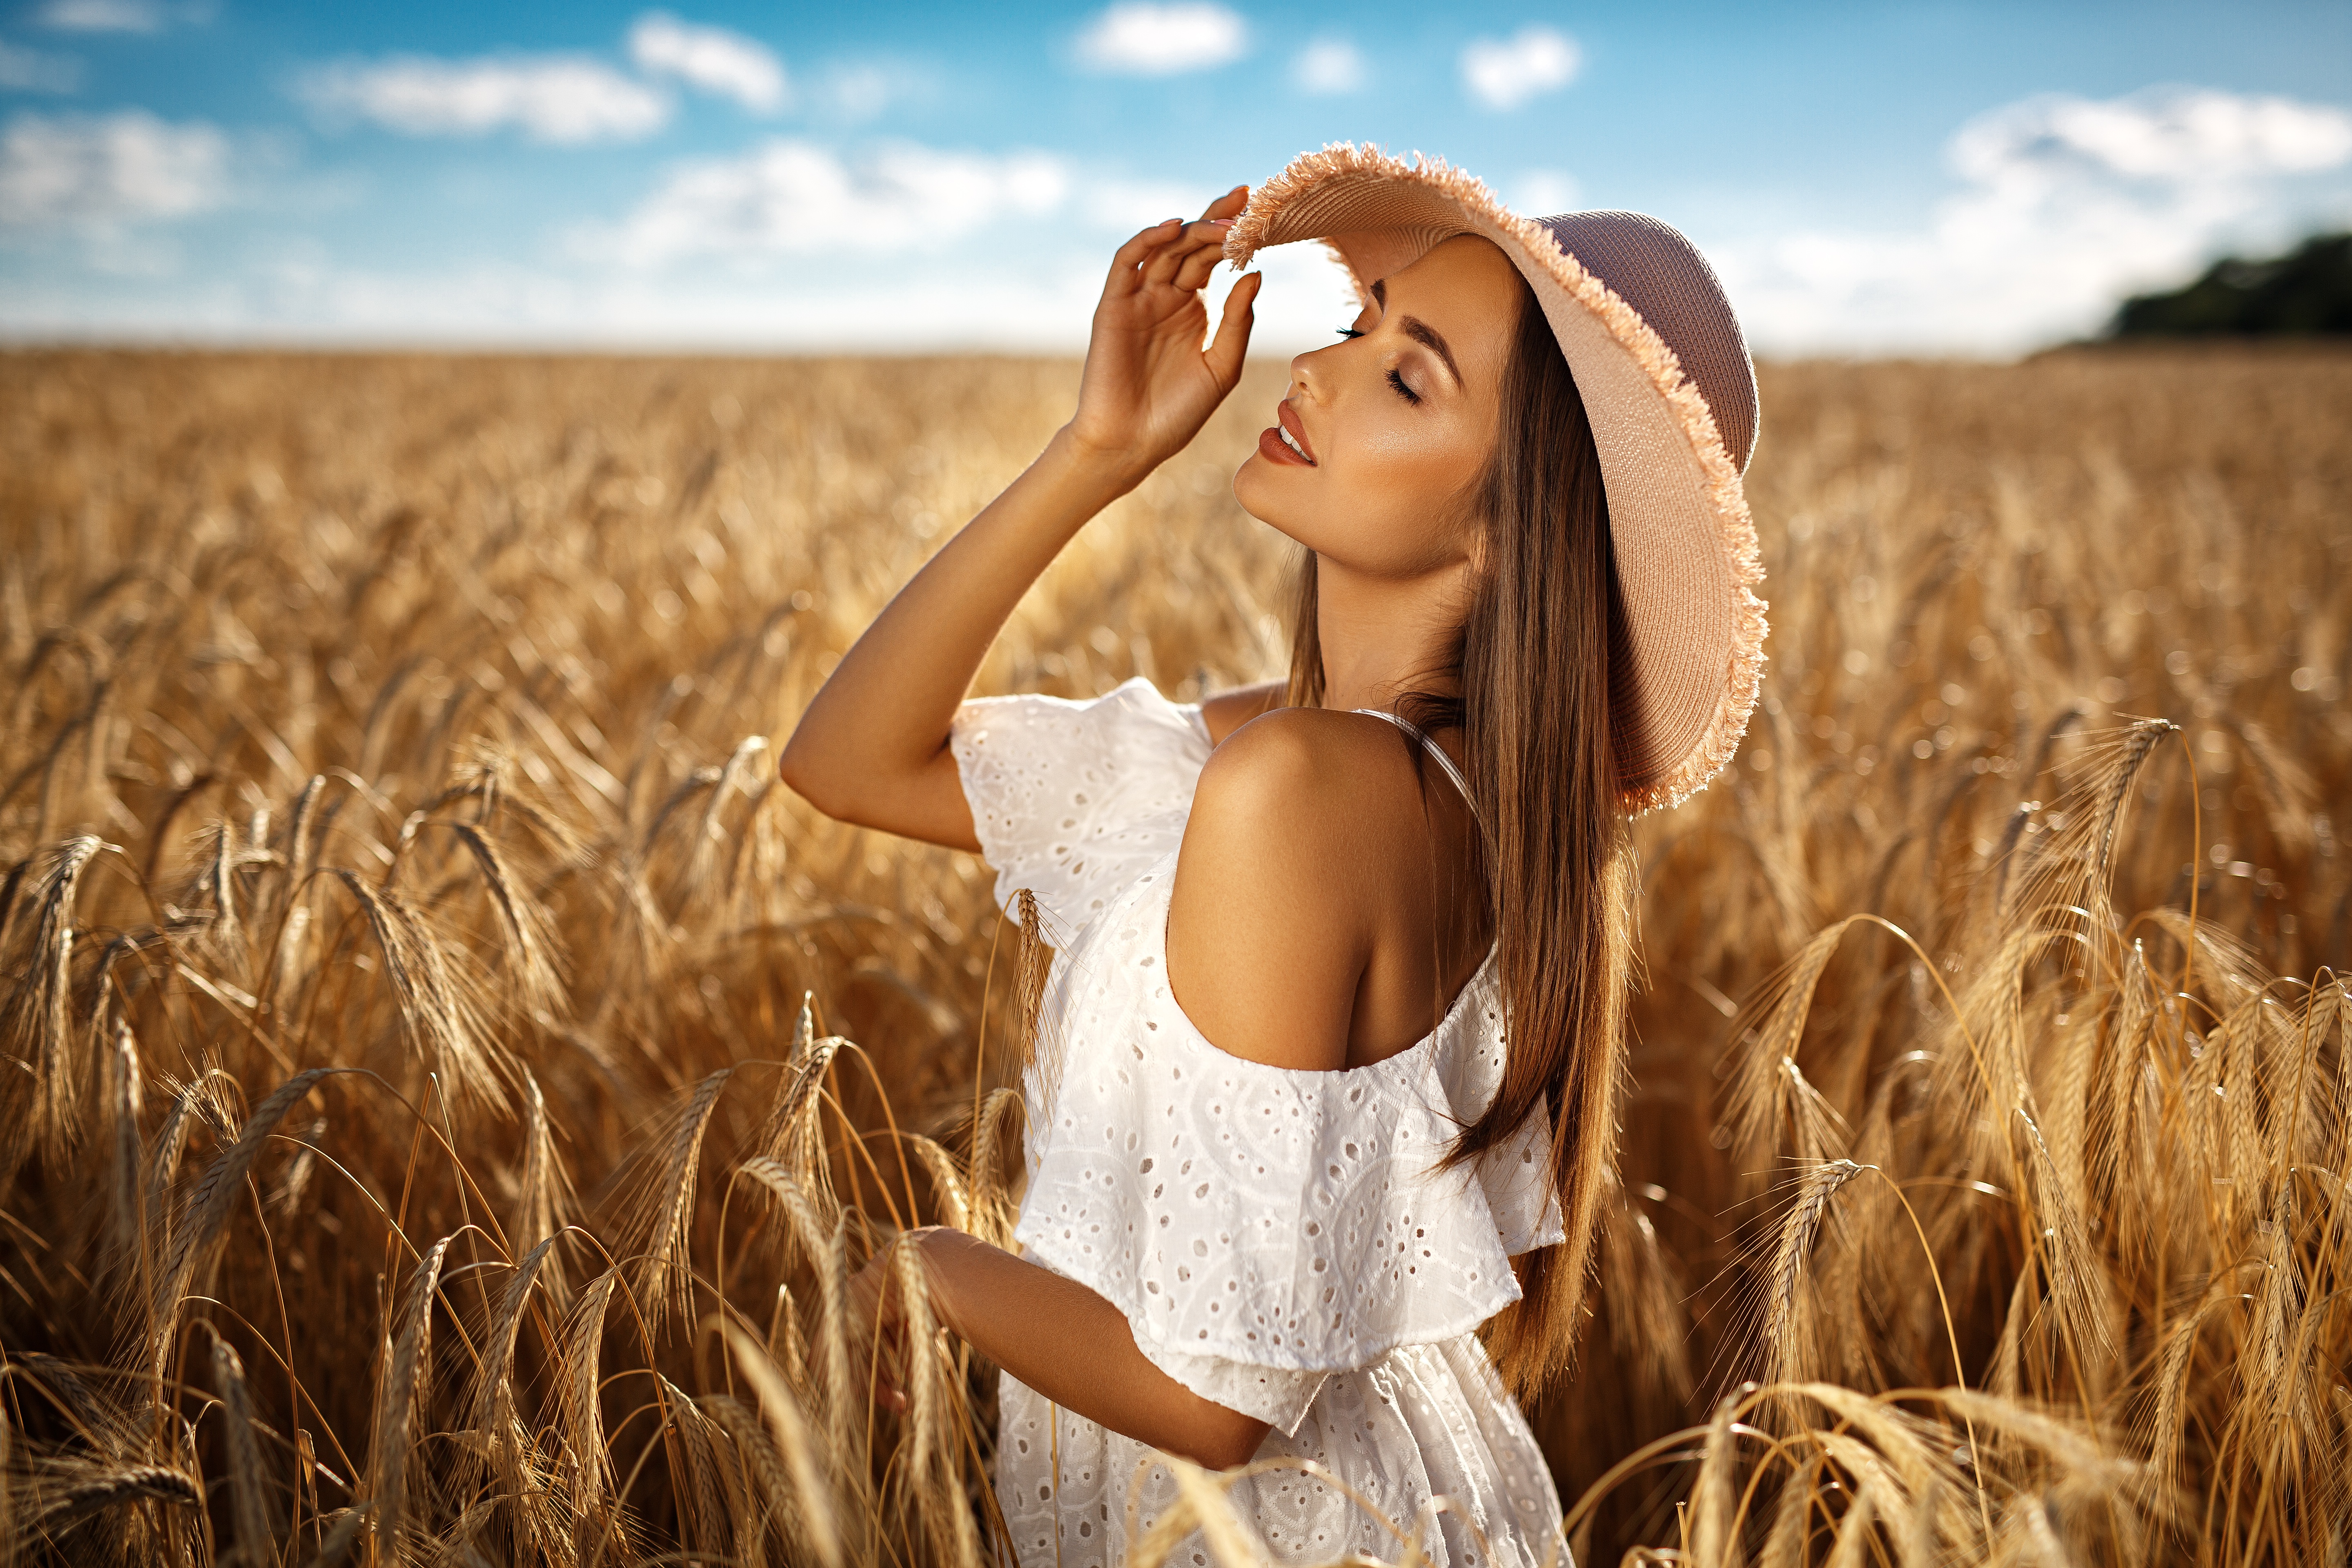 It was a beautiful summer. Девушка в поле. Девушка в пшеничном поле. Фотосессия в пшеничном поле. Девушка в шляпе в поле.